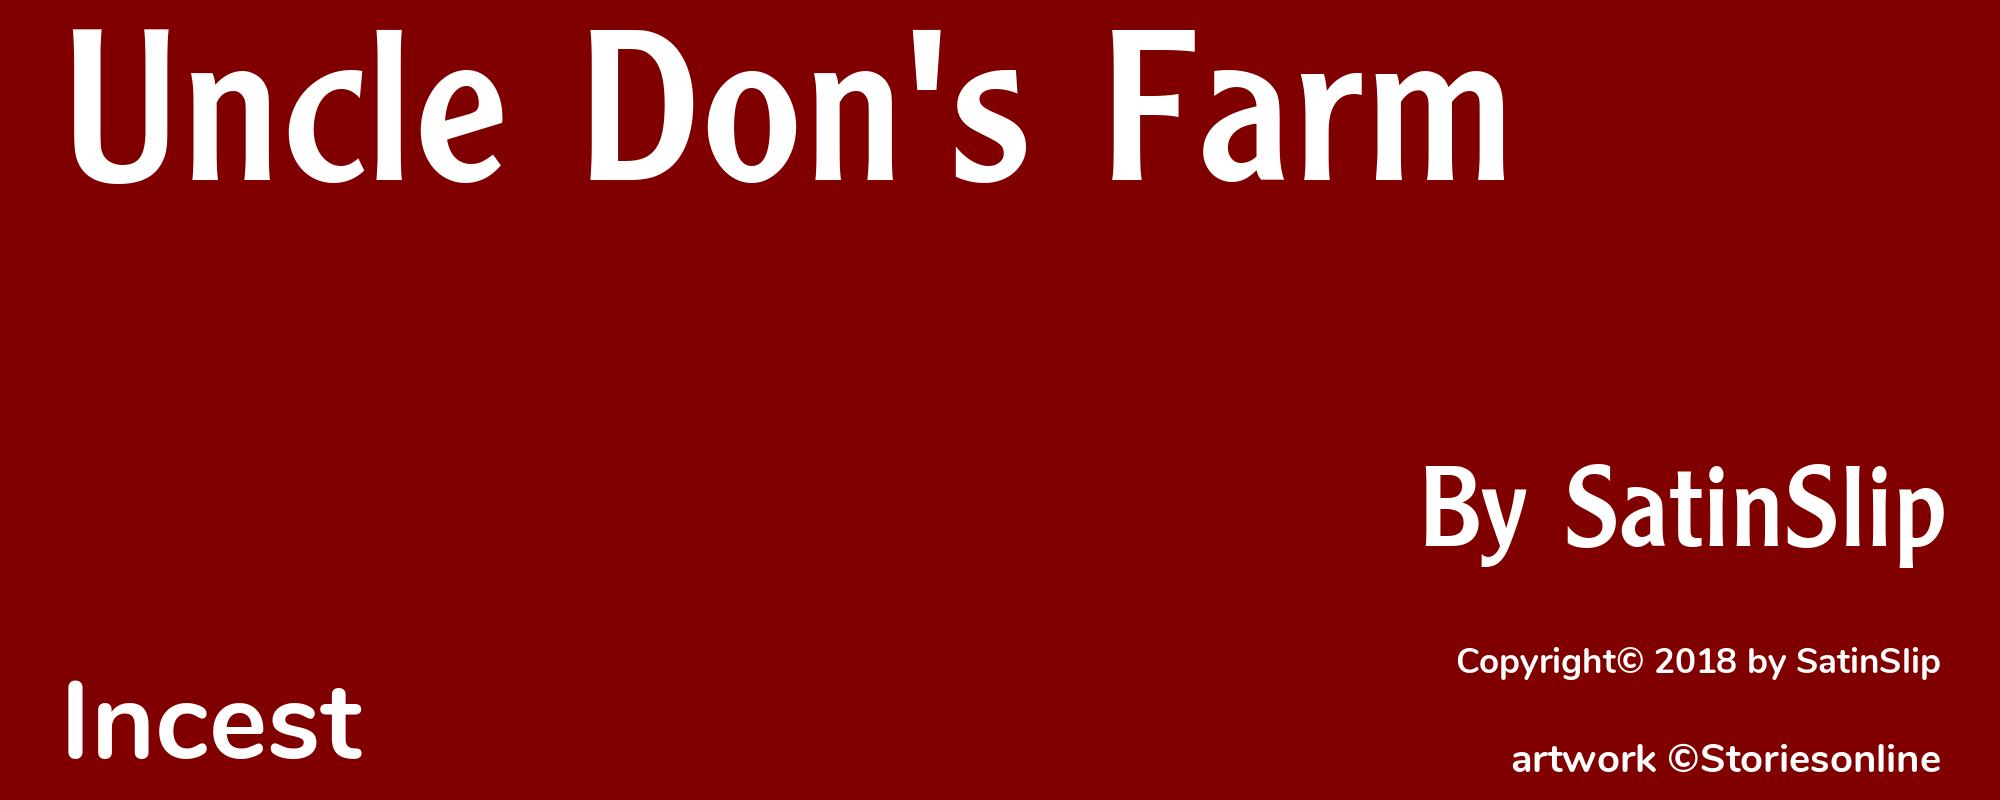 Uncle Don's Farm - Cover